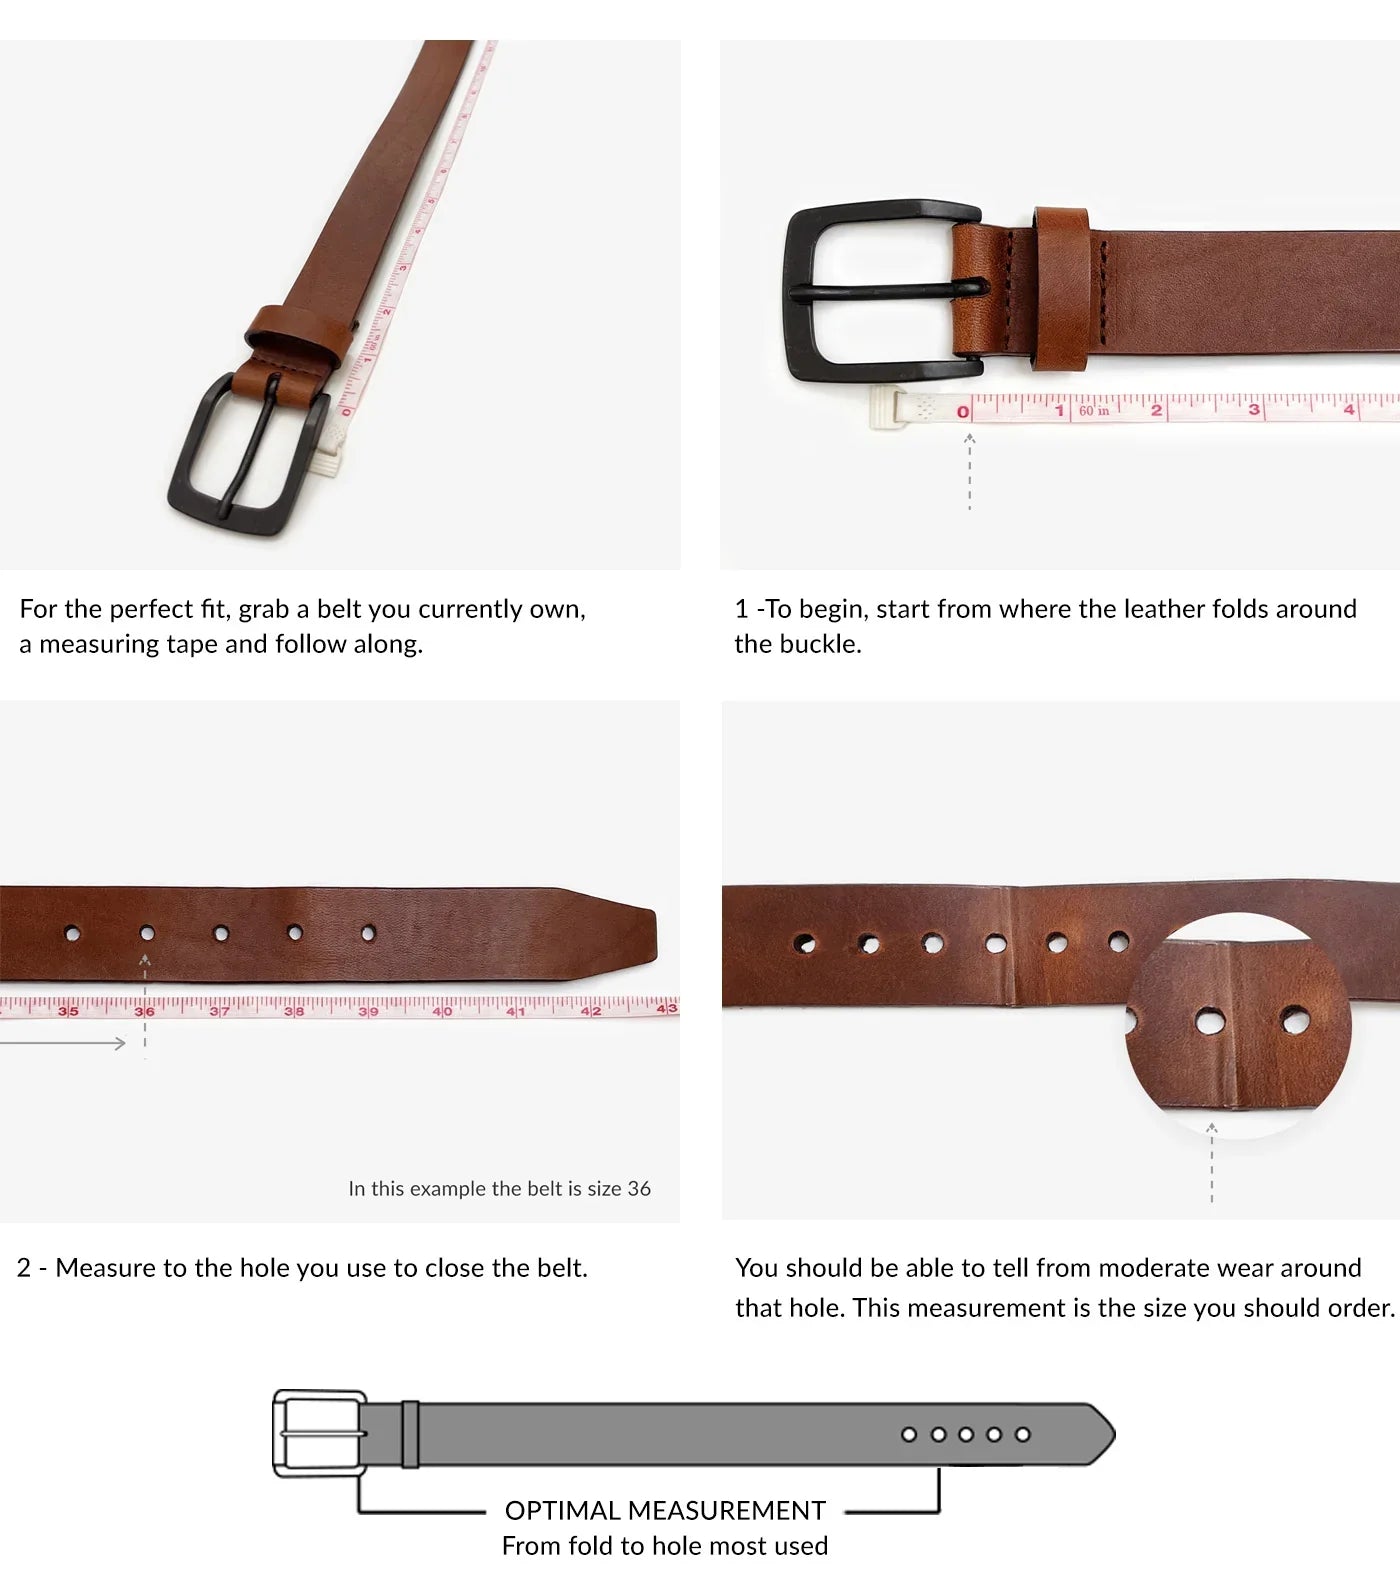 Brave Ursian Nappa Leather Belt